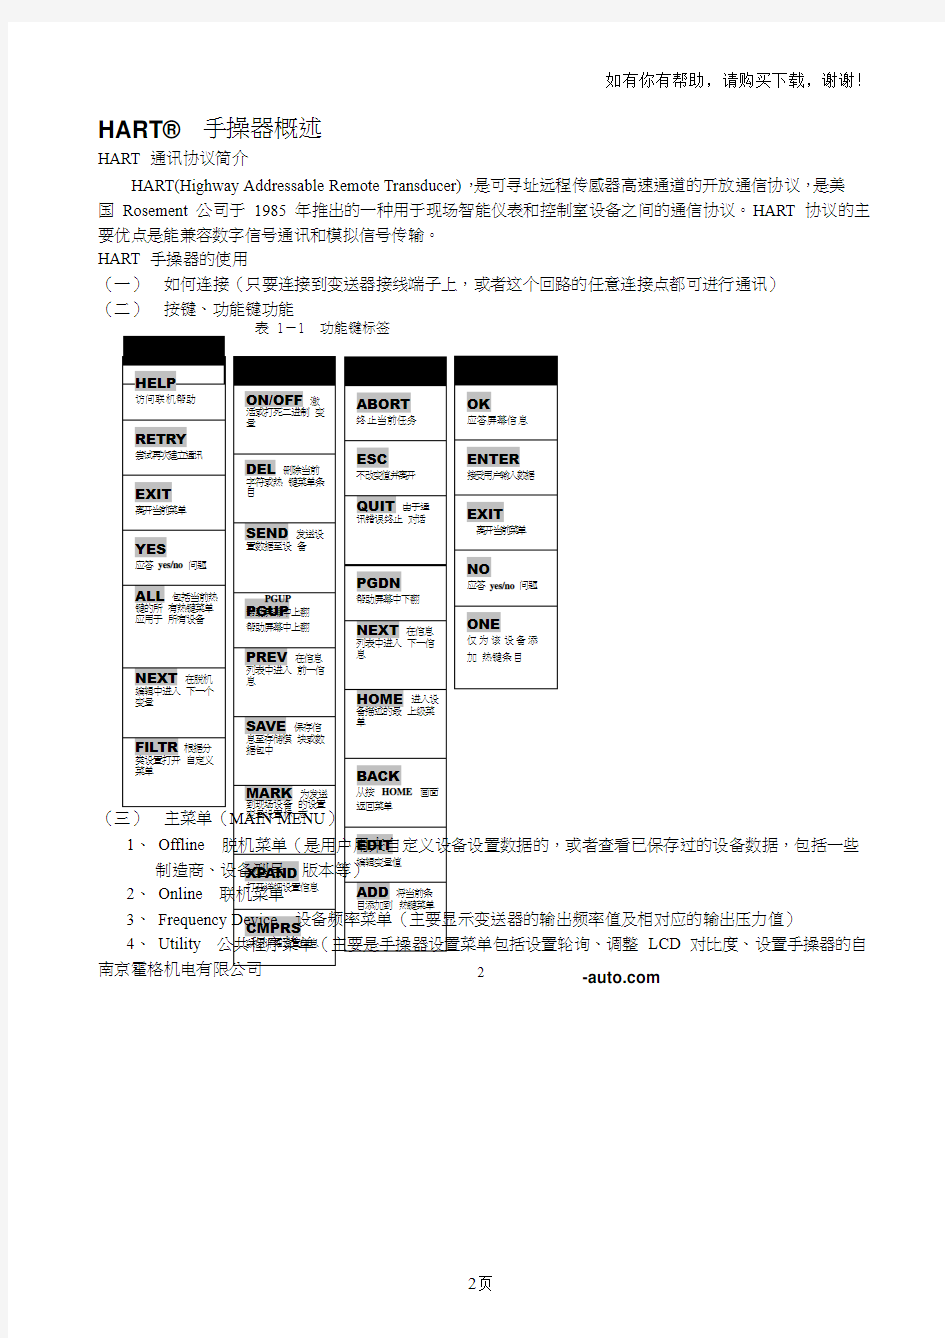 HART375手操器中文培训手册